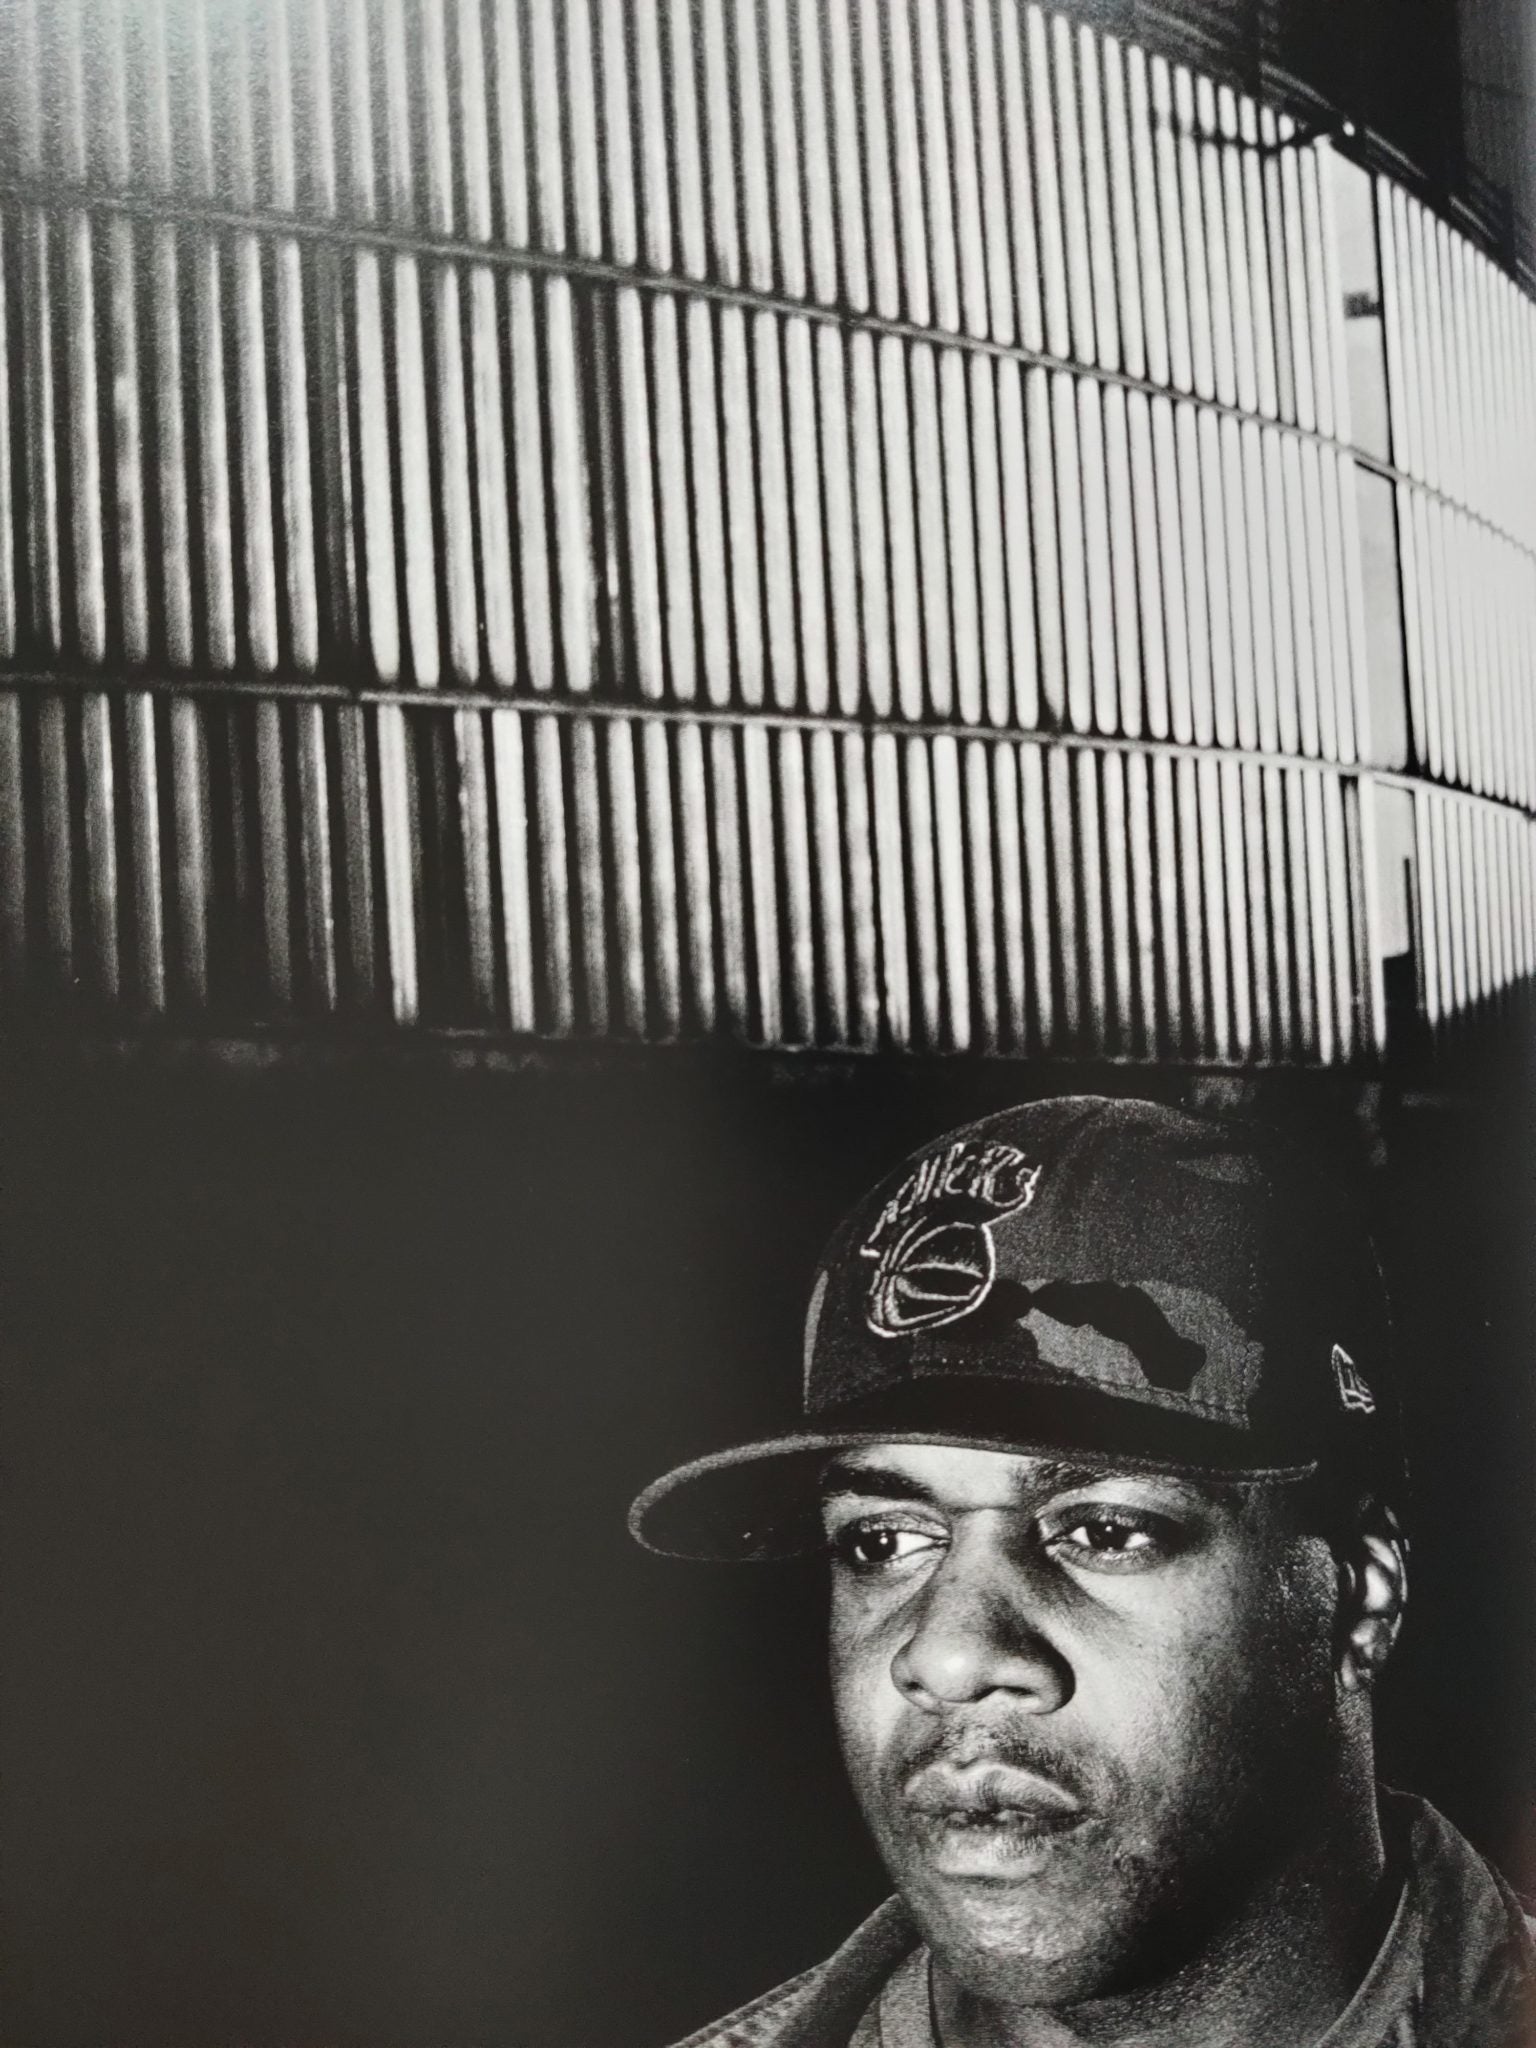 Buy 1,2 1,2: Portraits of Hip Hop by Ilja Meefout online – Setanta 